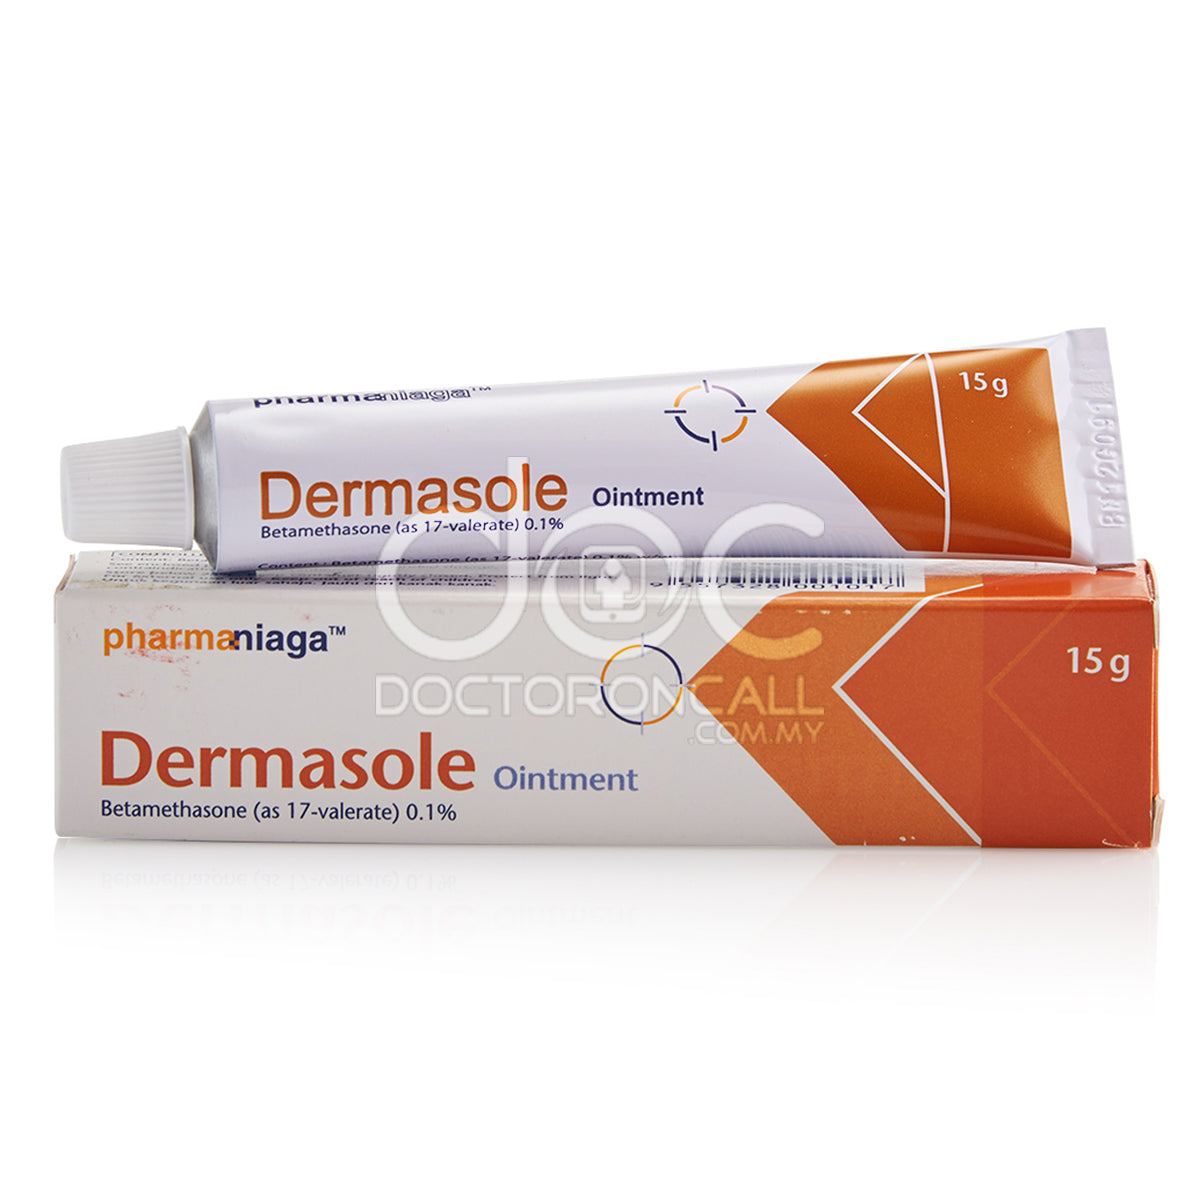 Pharmaniaga Dermasole Ointment 15g - DoctorOnCall Online Pharmacy